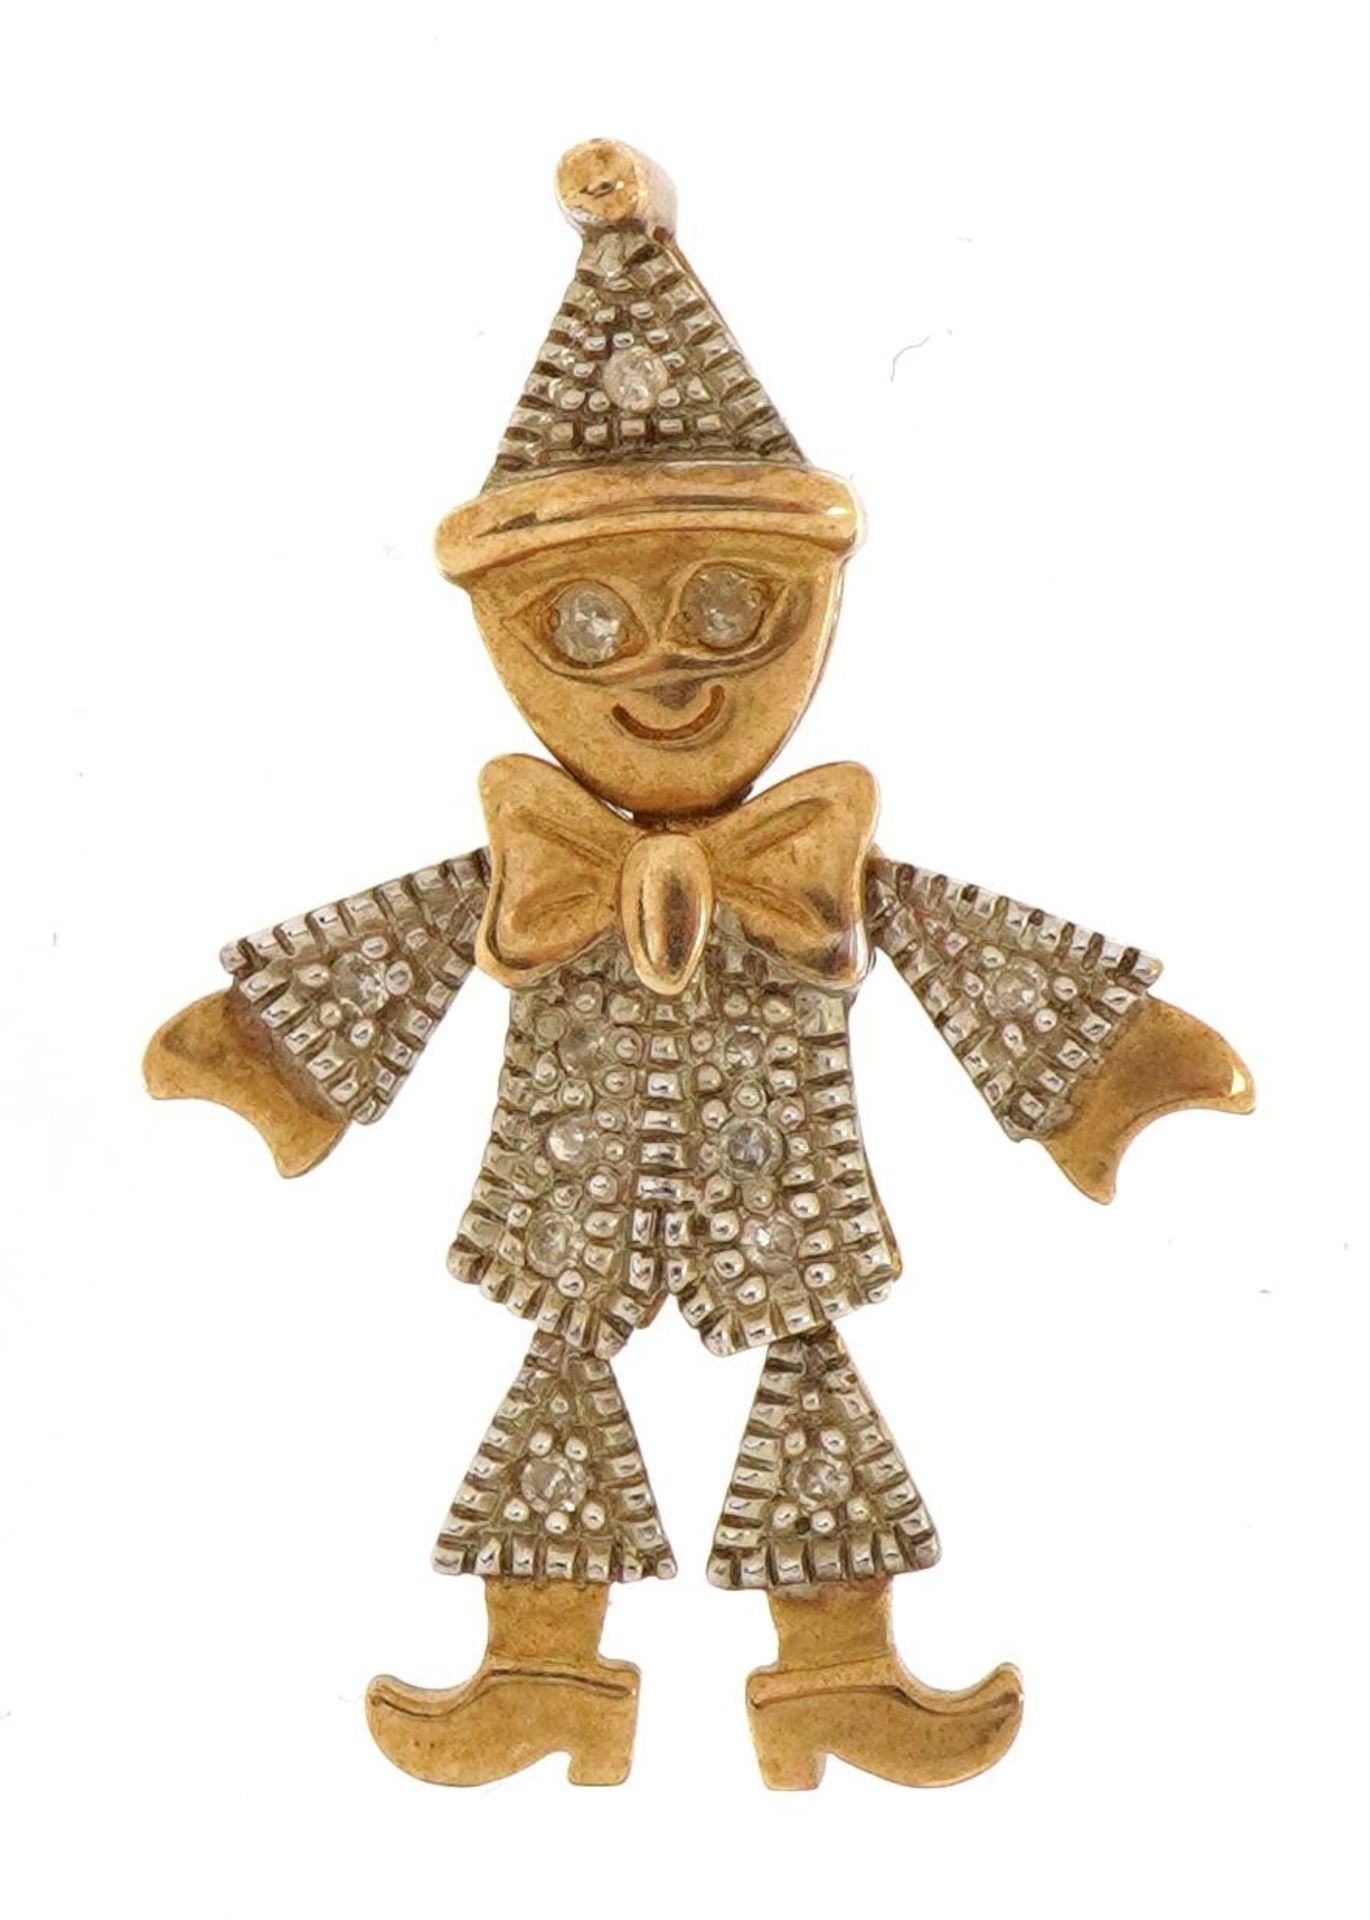 9ct gold diamond set clown pendant with articulated limbs, 2.9cm high, 3.2g